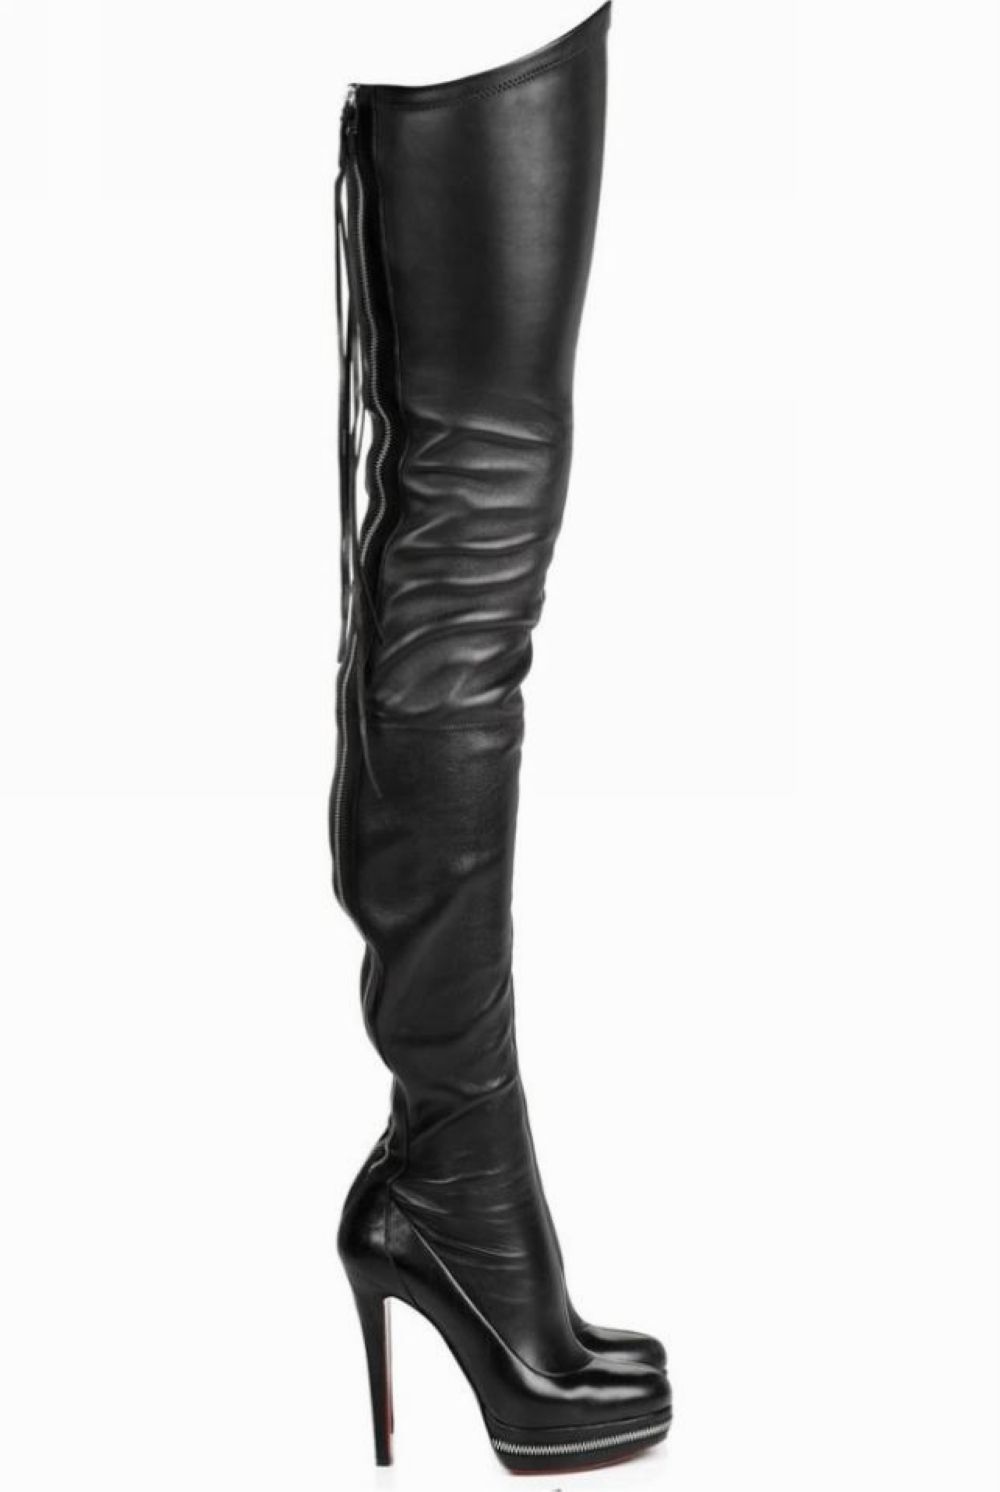 Venta caliente- Botas Mujeres High Boots Calidad Elástica PU Slip-On Boot Woman